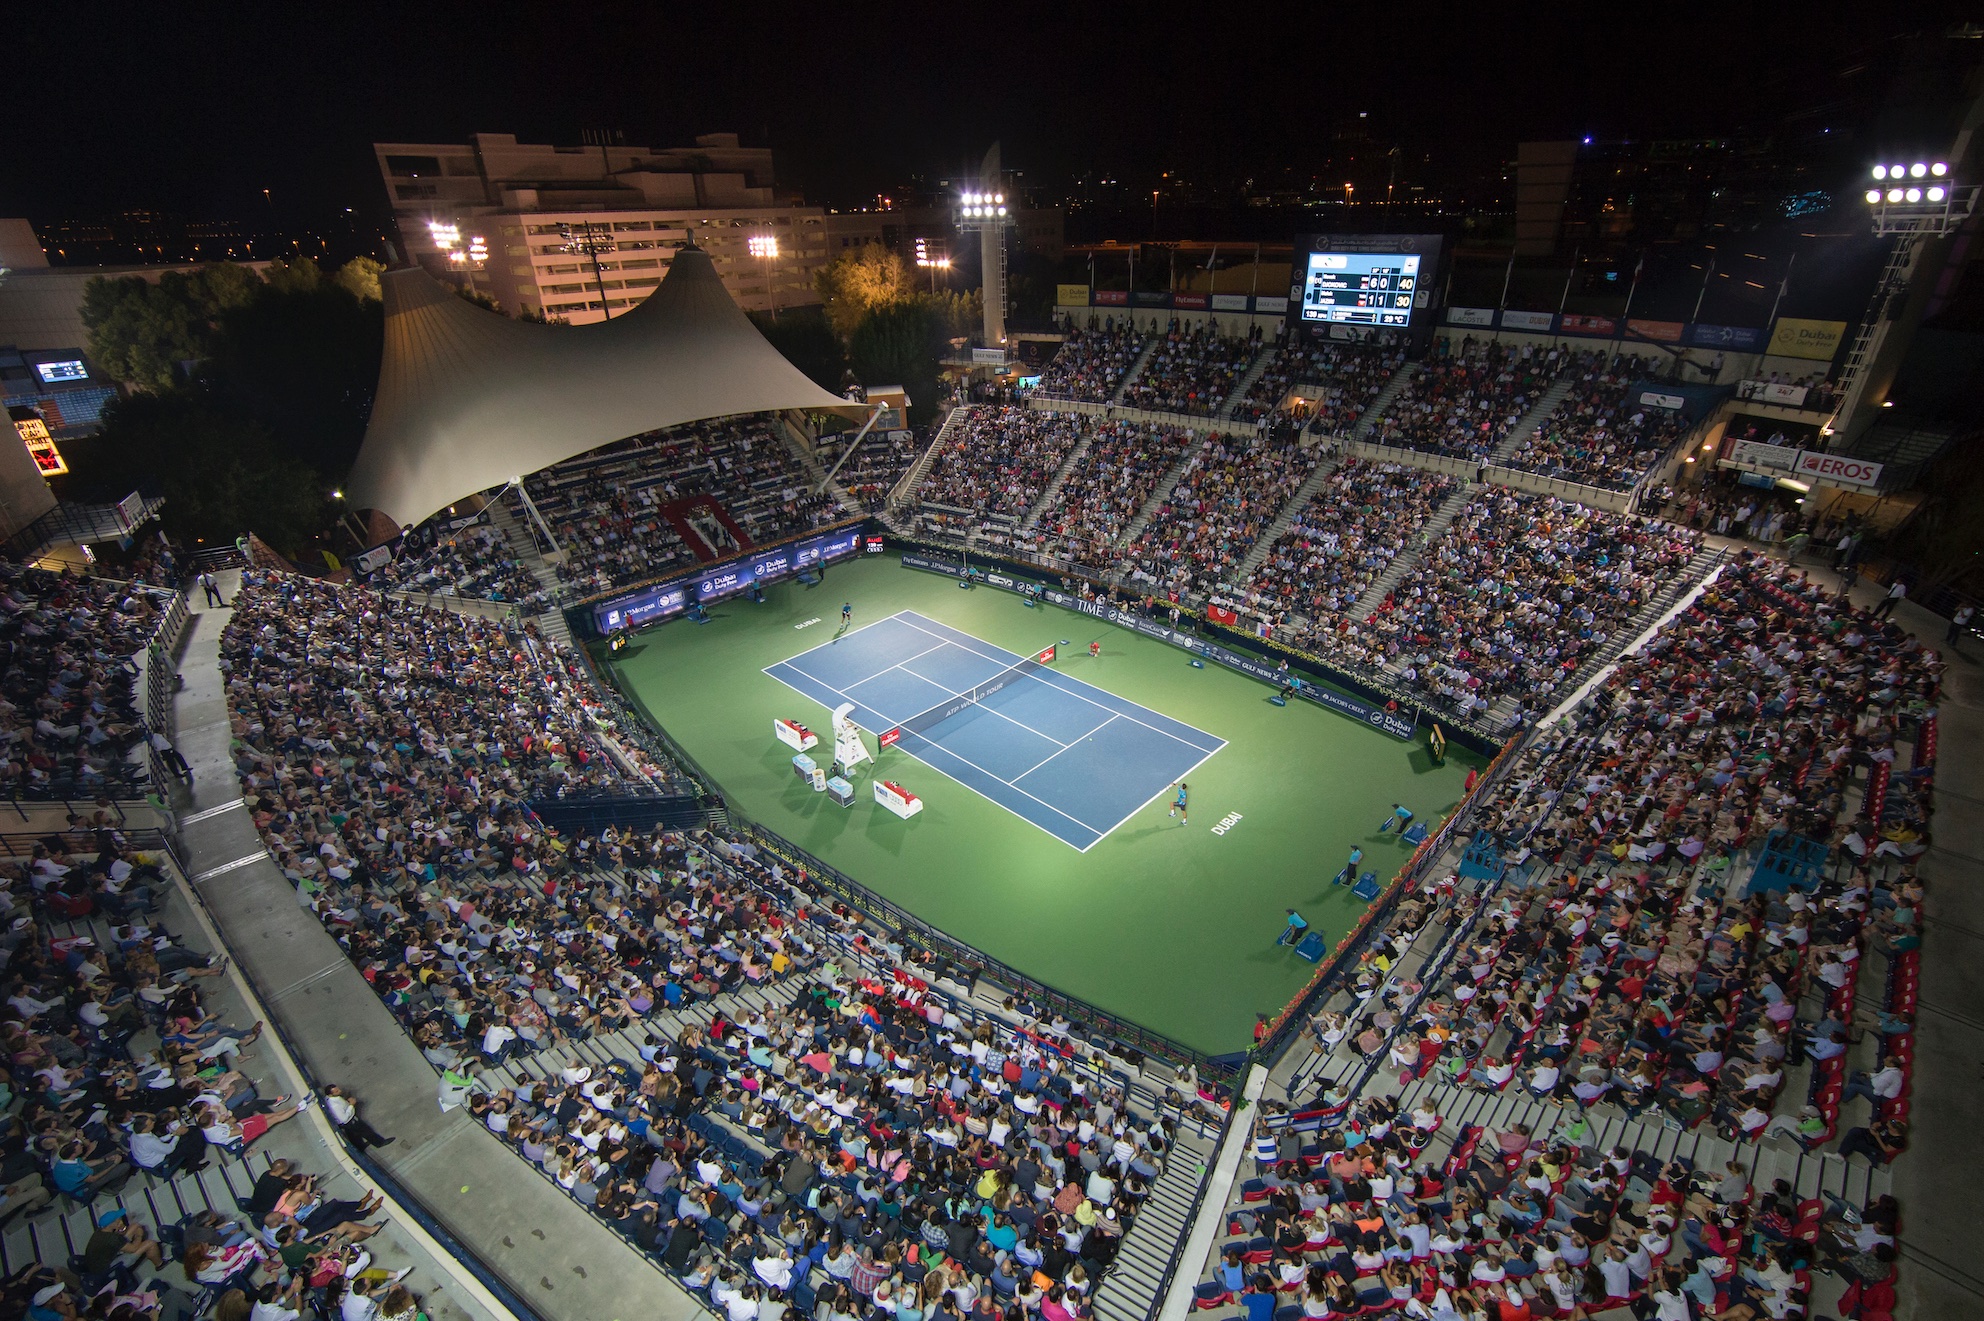 Dubai Duty Free Tennis Championships, 2020 WTA Premier Tennis